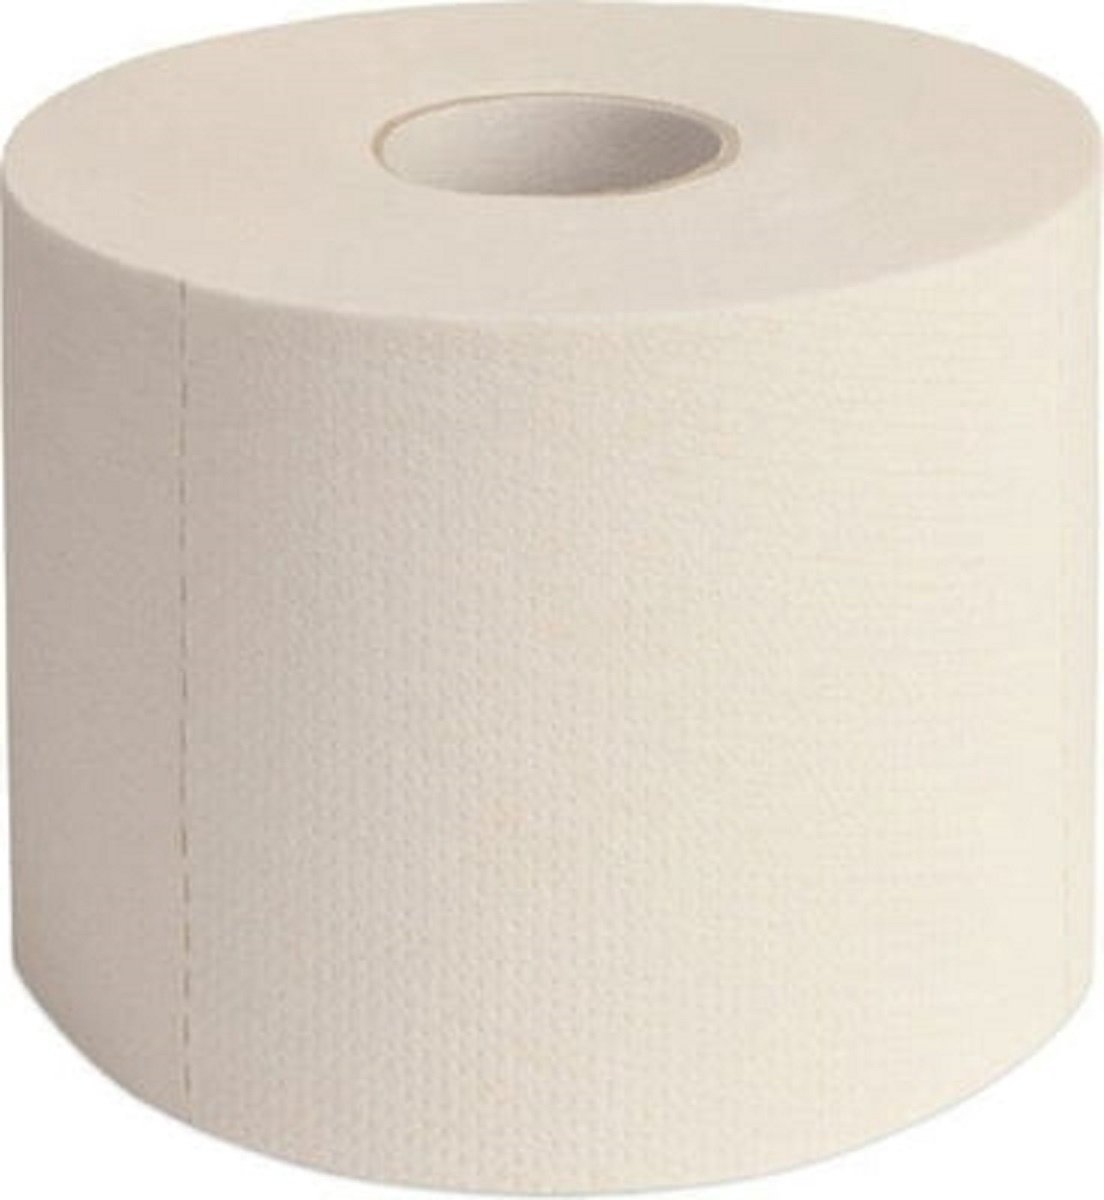 KORDULA - Toiletpapier 100% recycled 3laags/400 vel